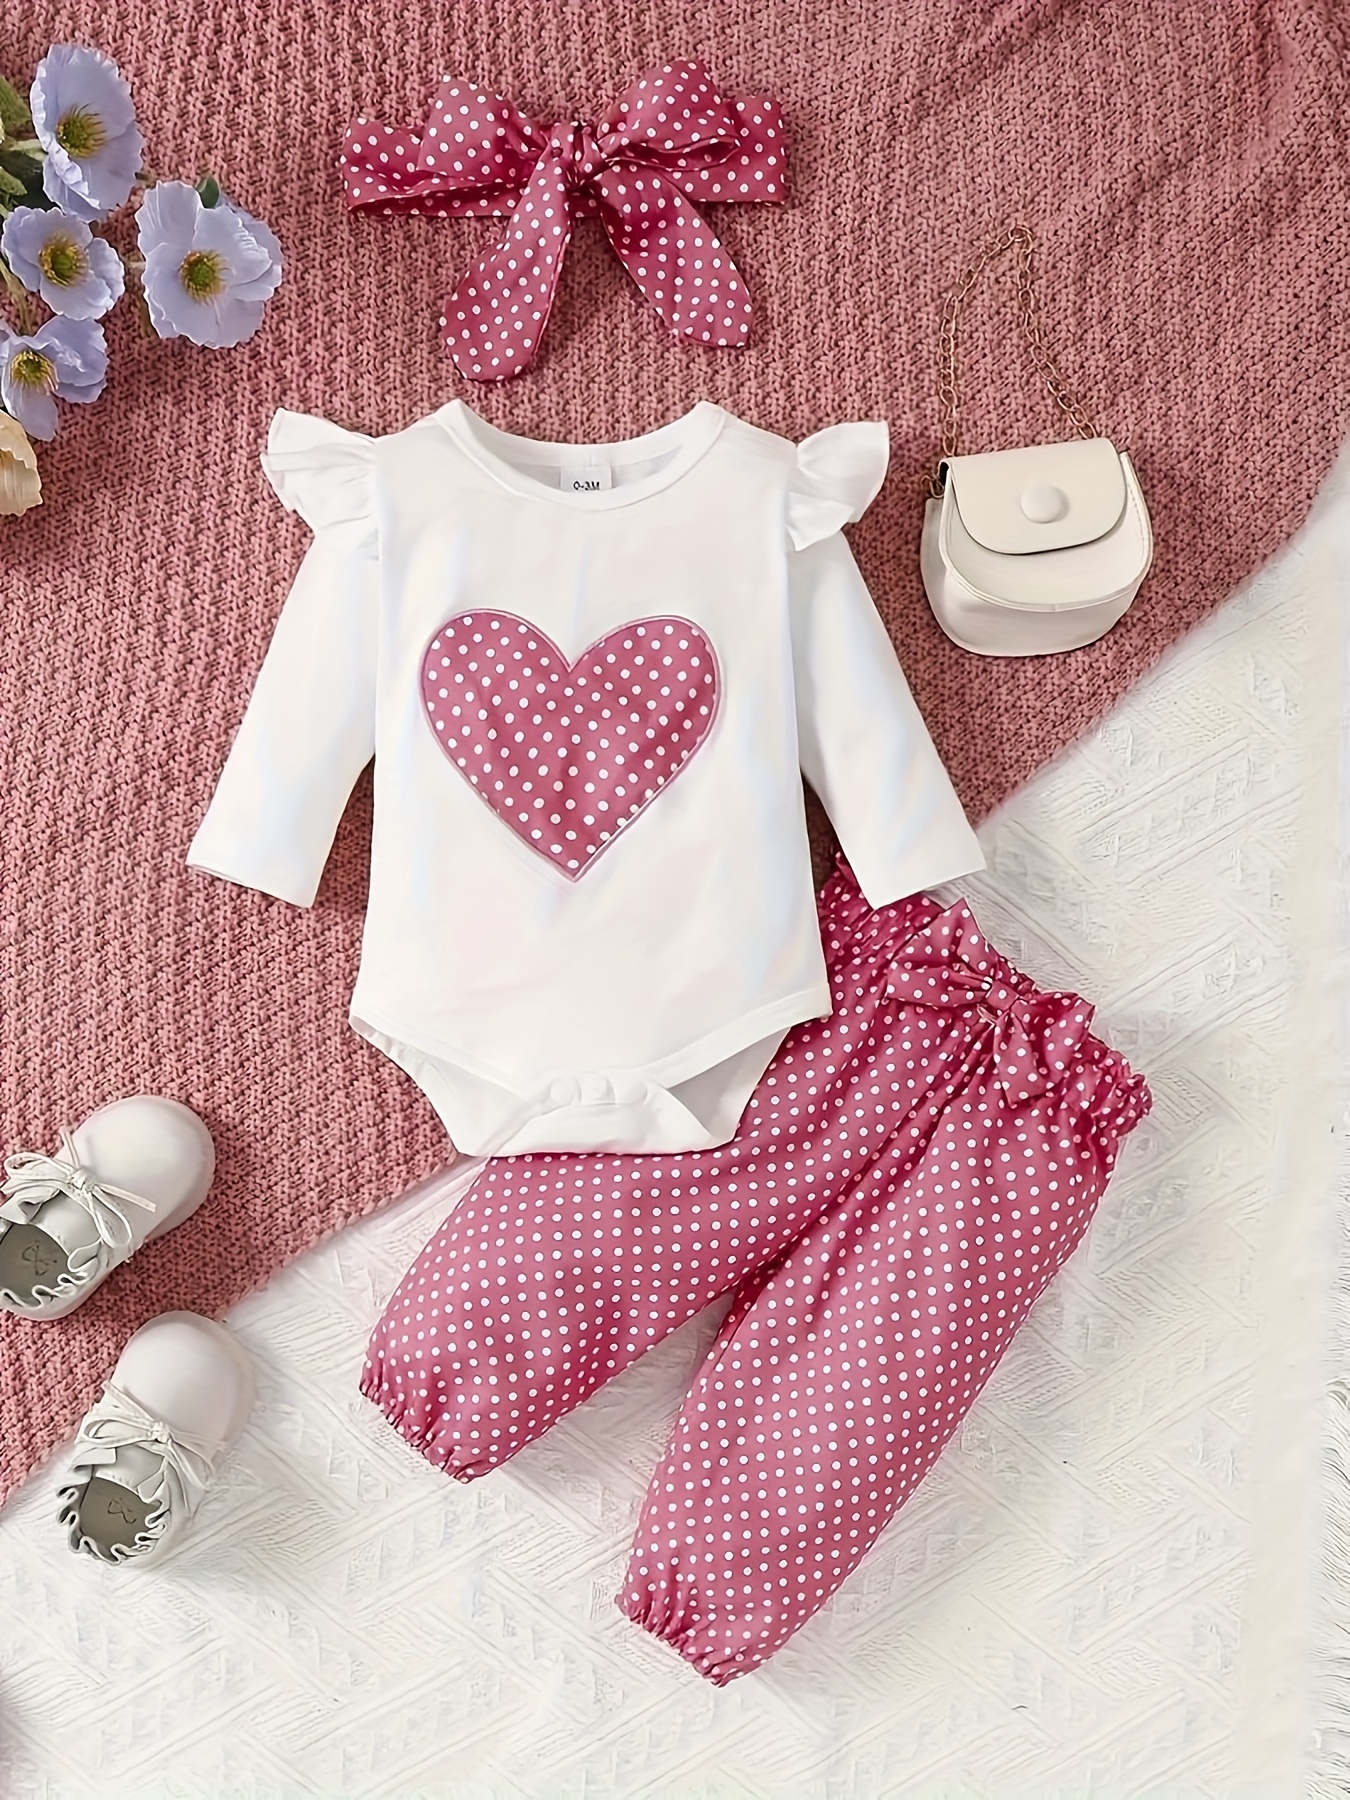  CM-Kid Little Girls Clothes Outfits Heart Print Shirt